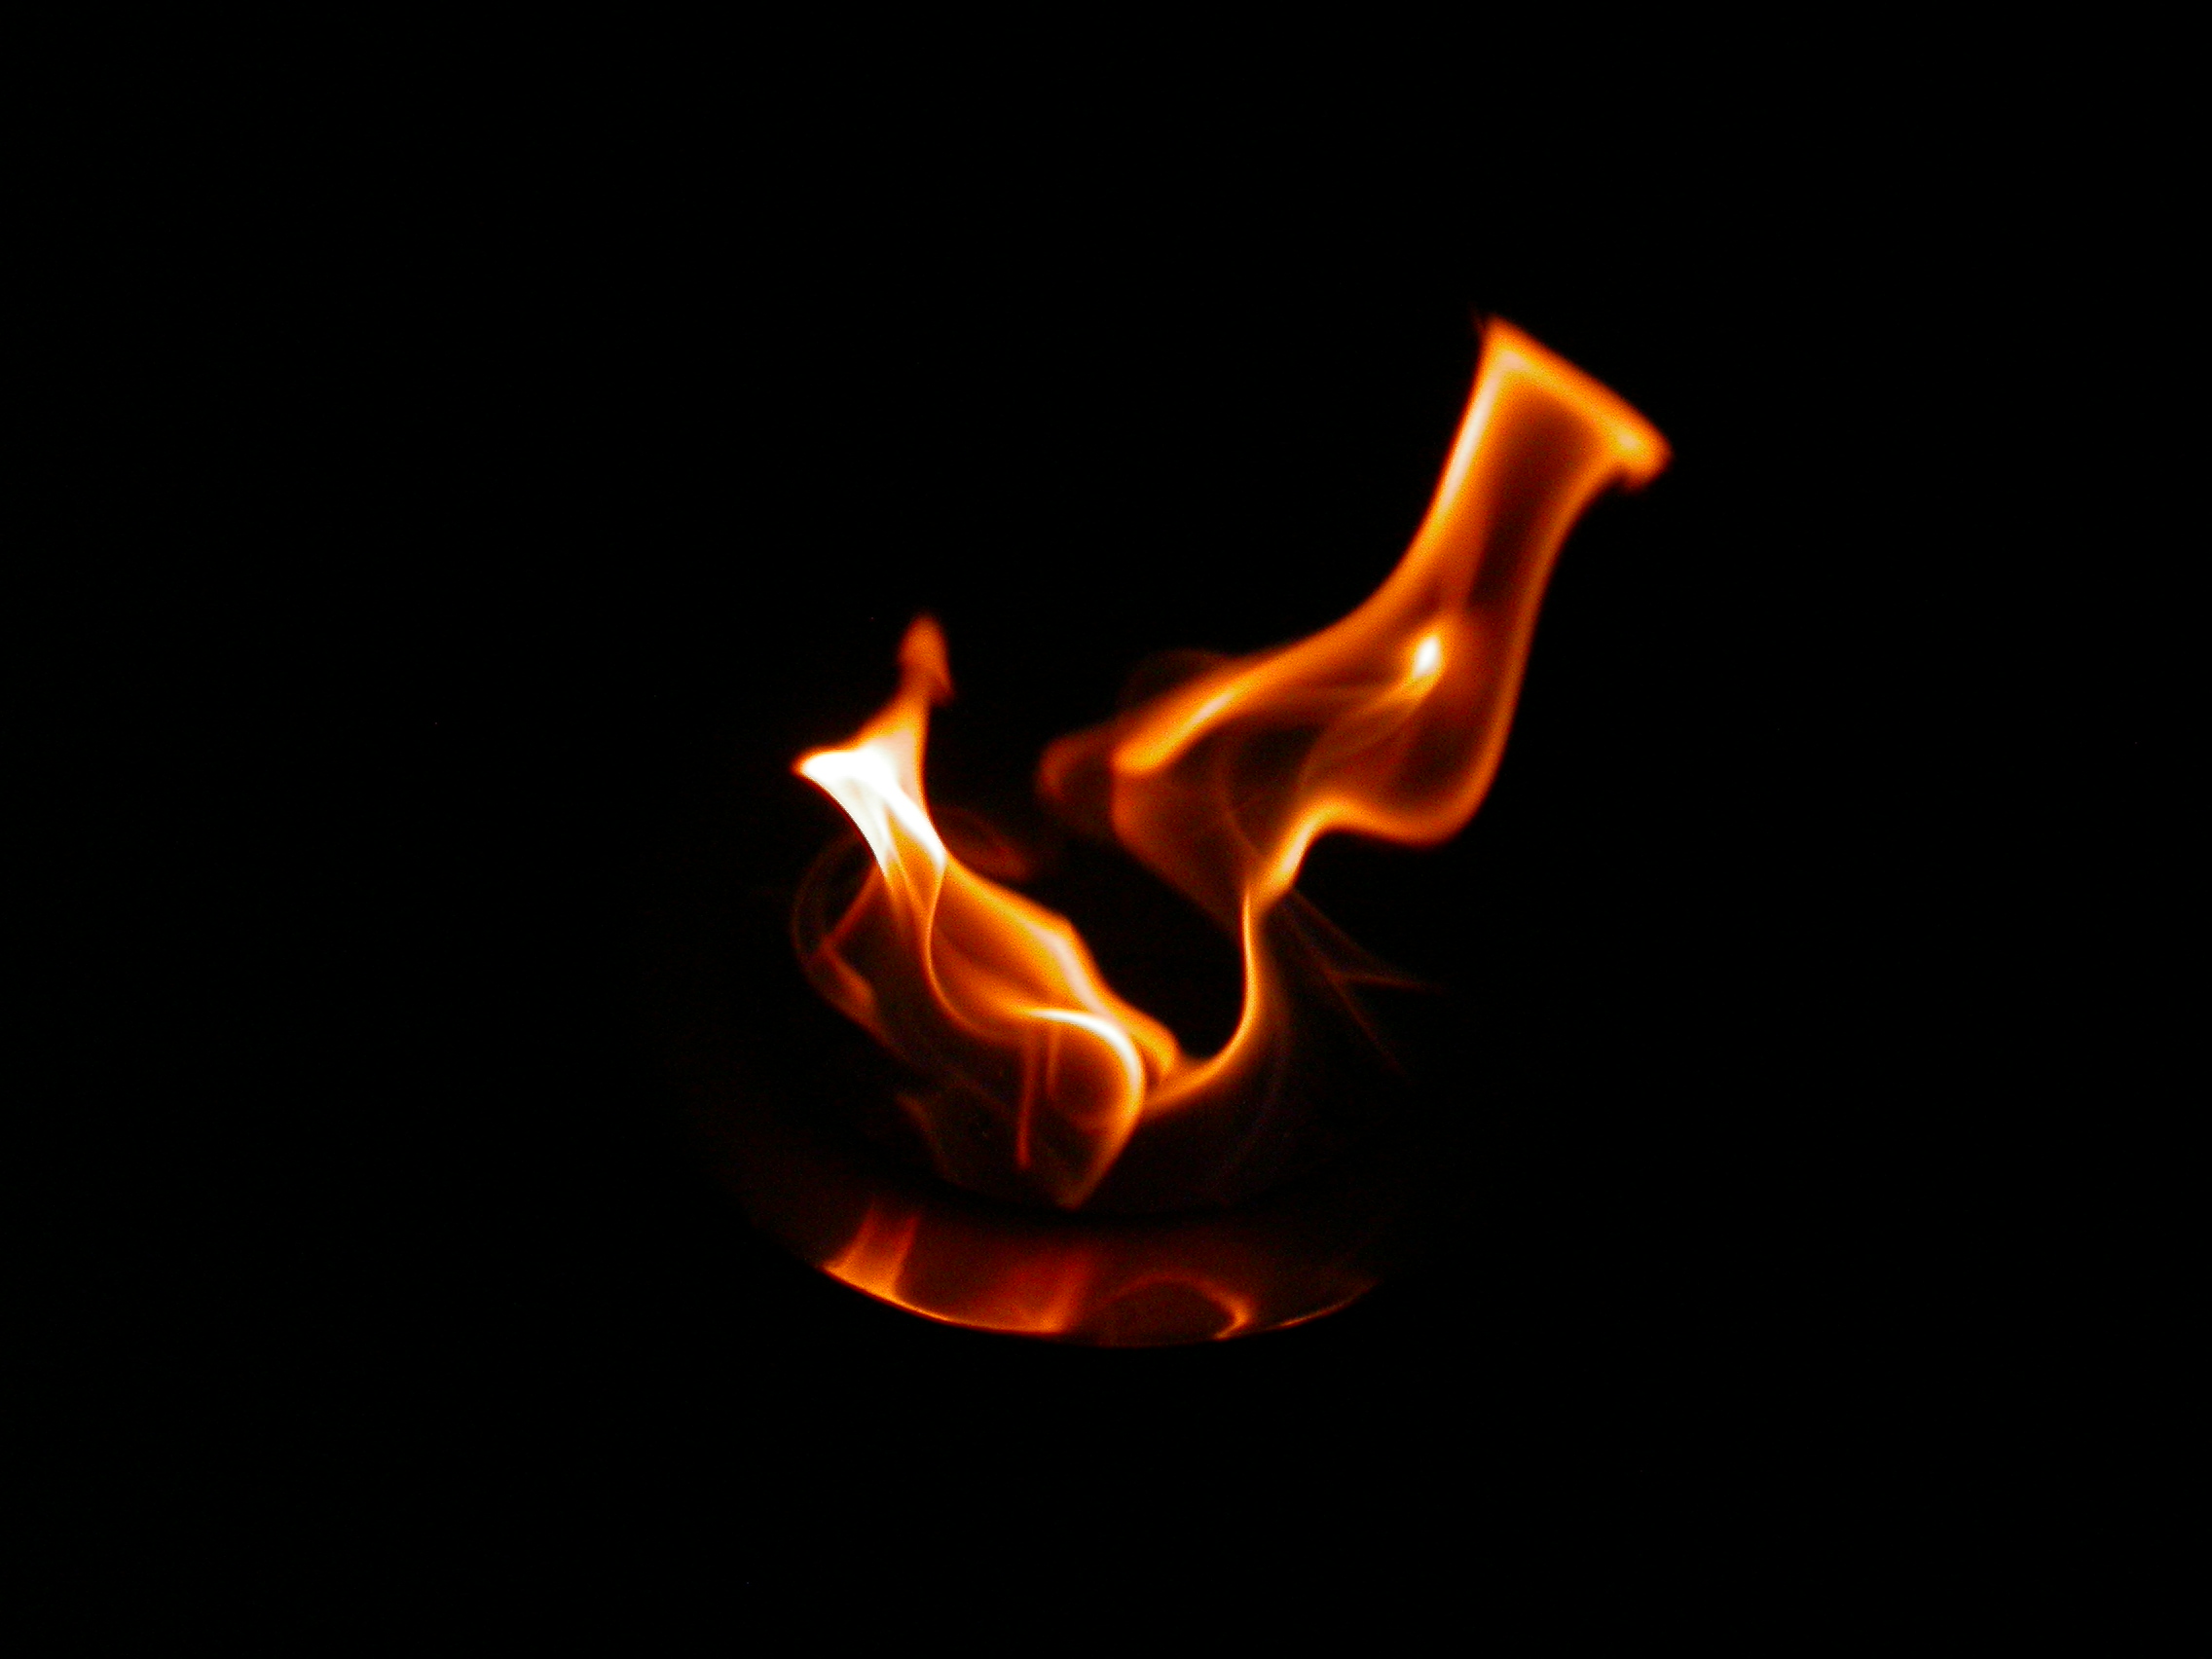 paul metal night flame goblet of fire pot texture